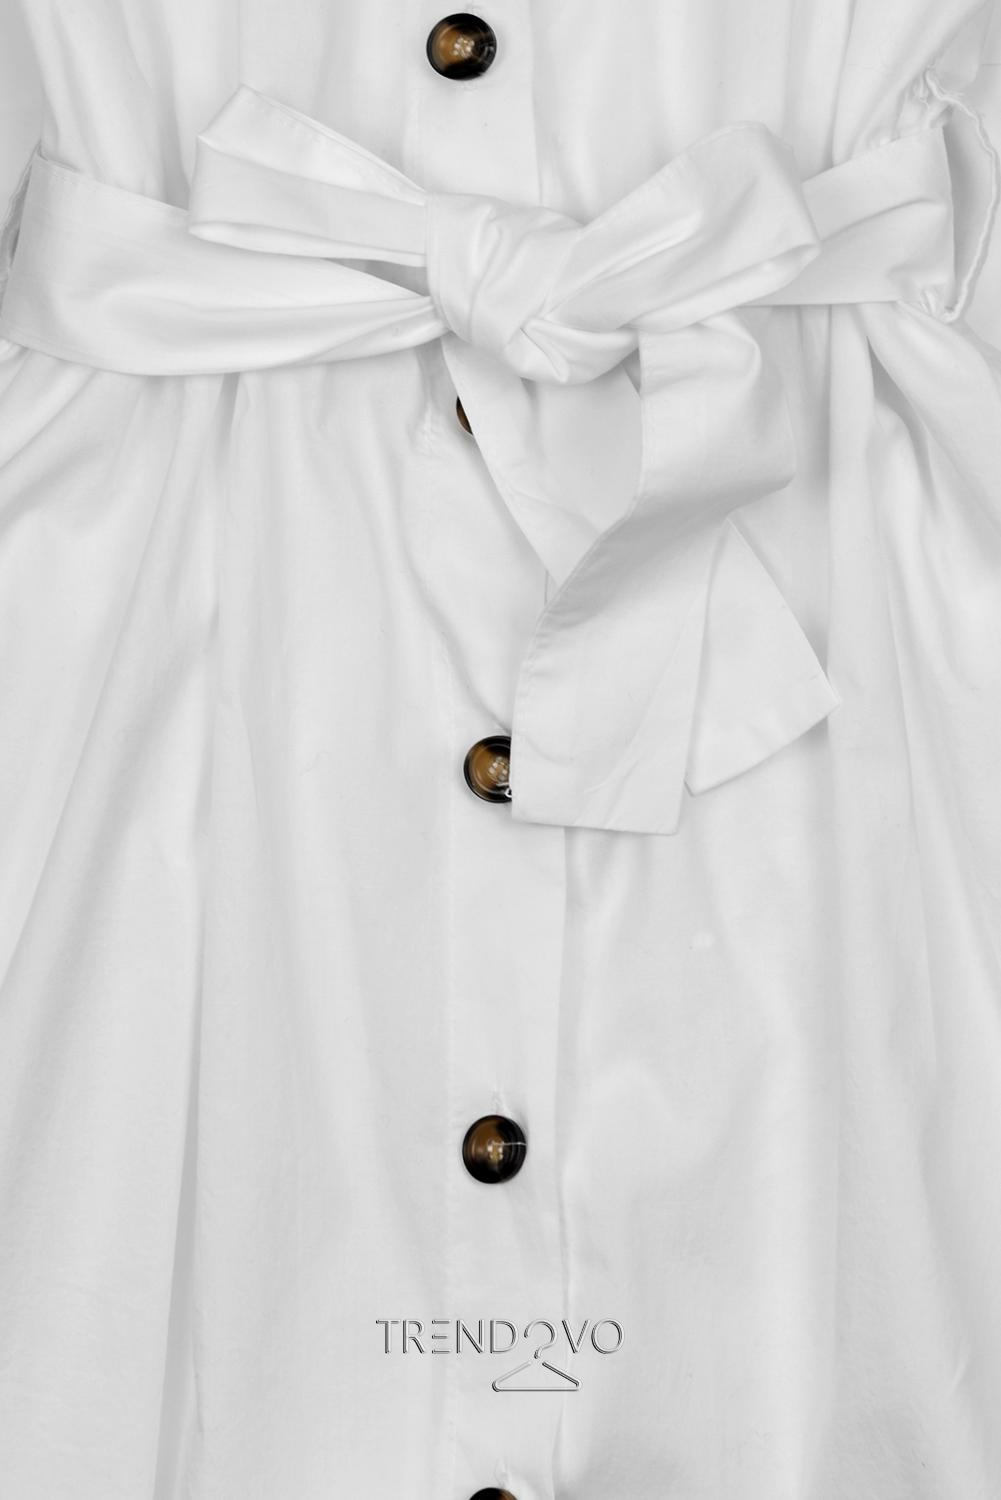 Biele krátke košeľové šaty